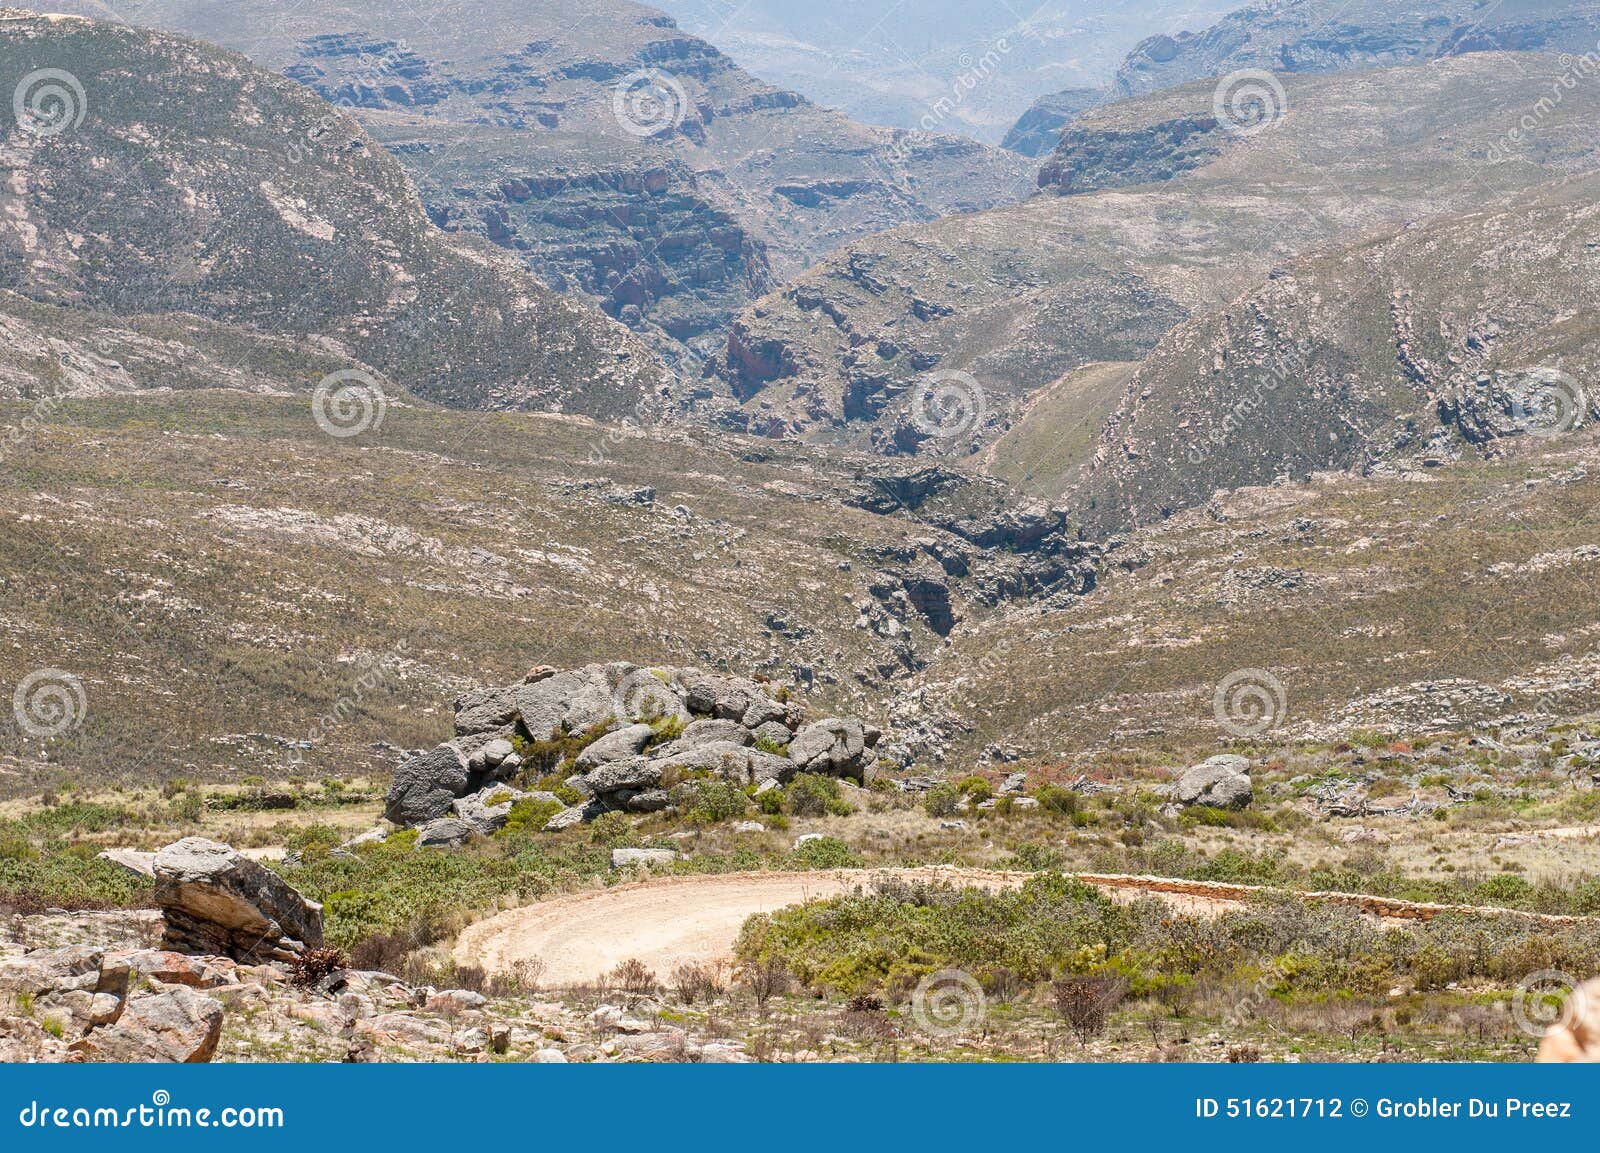 inhospitable valleys of the arid swartberg